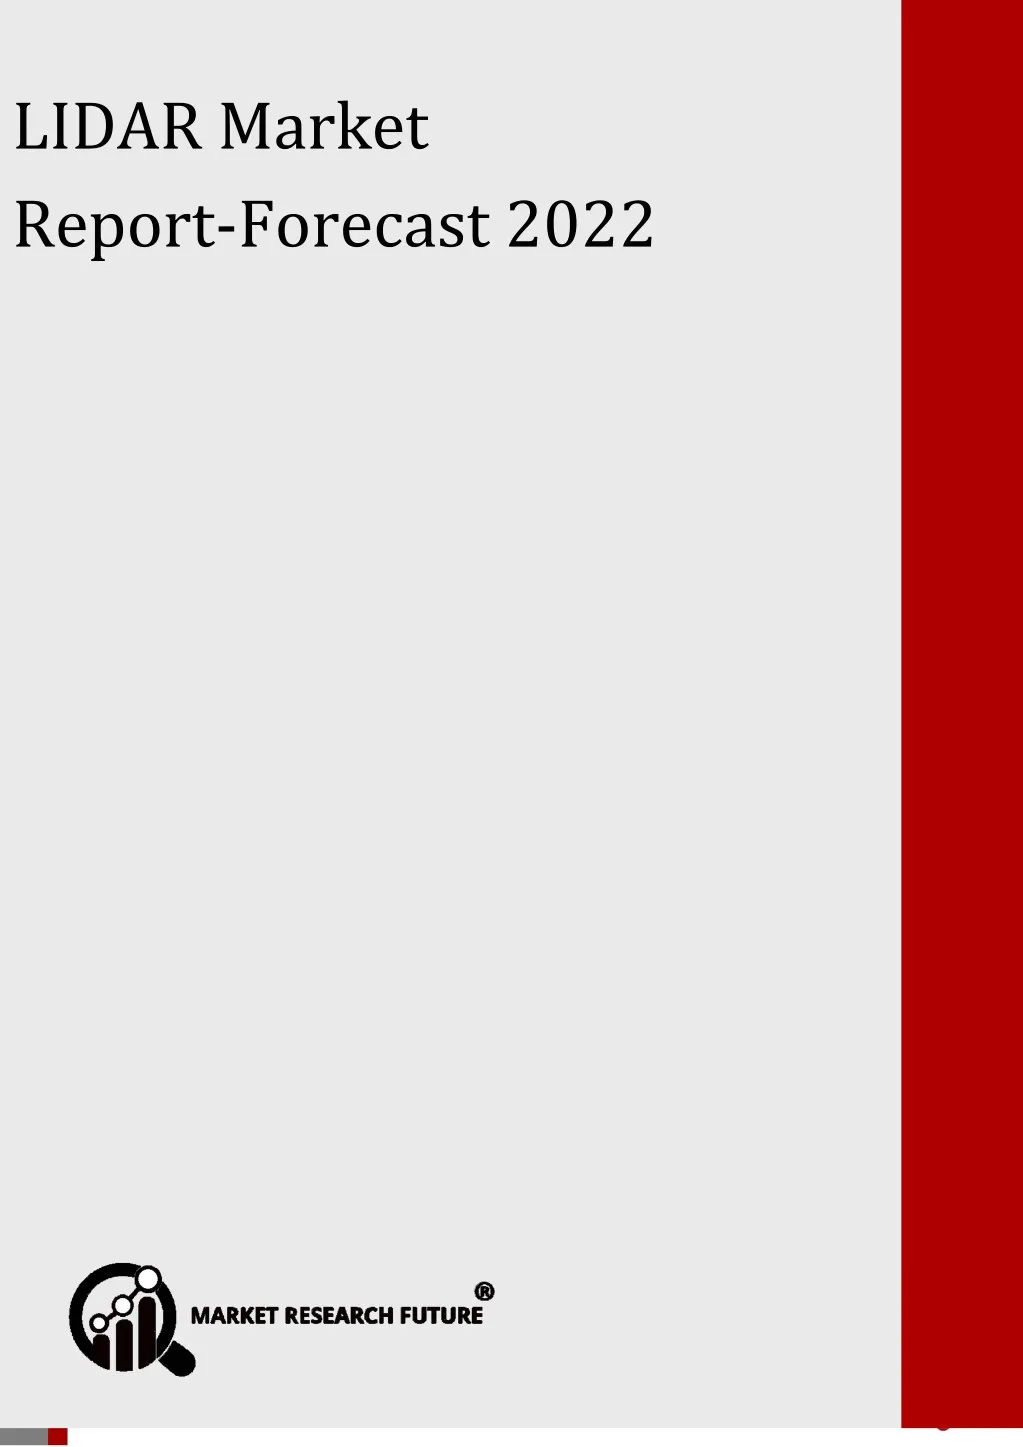 lidar market forecast 2022 lidar market report